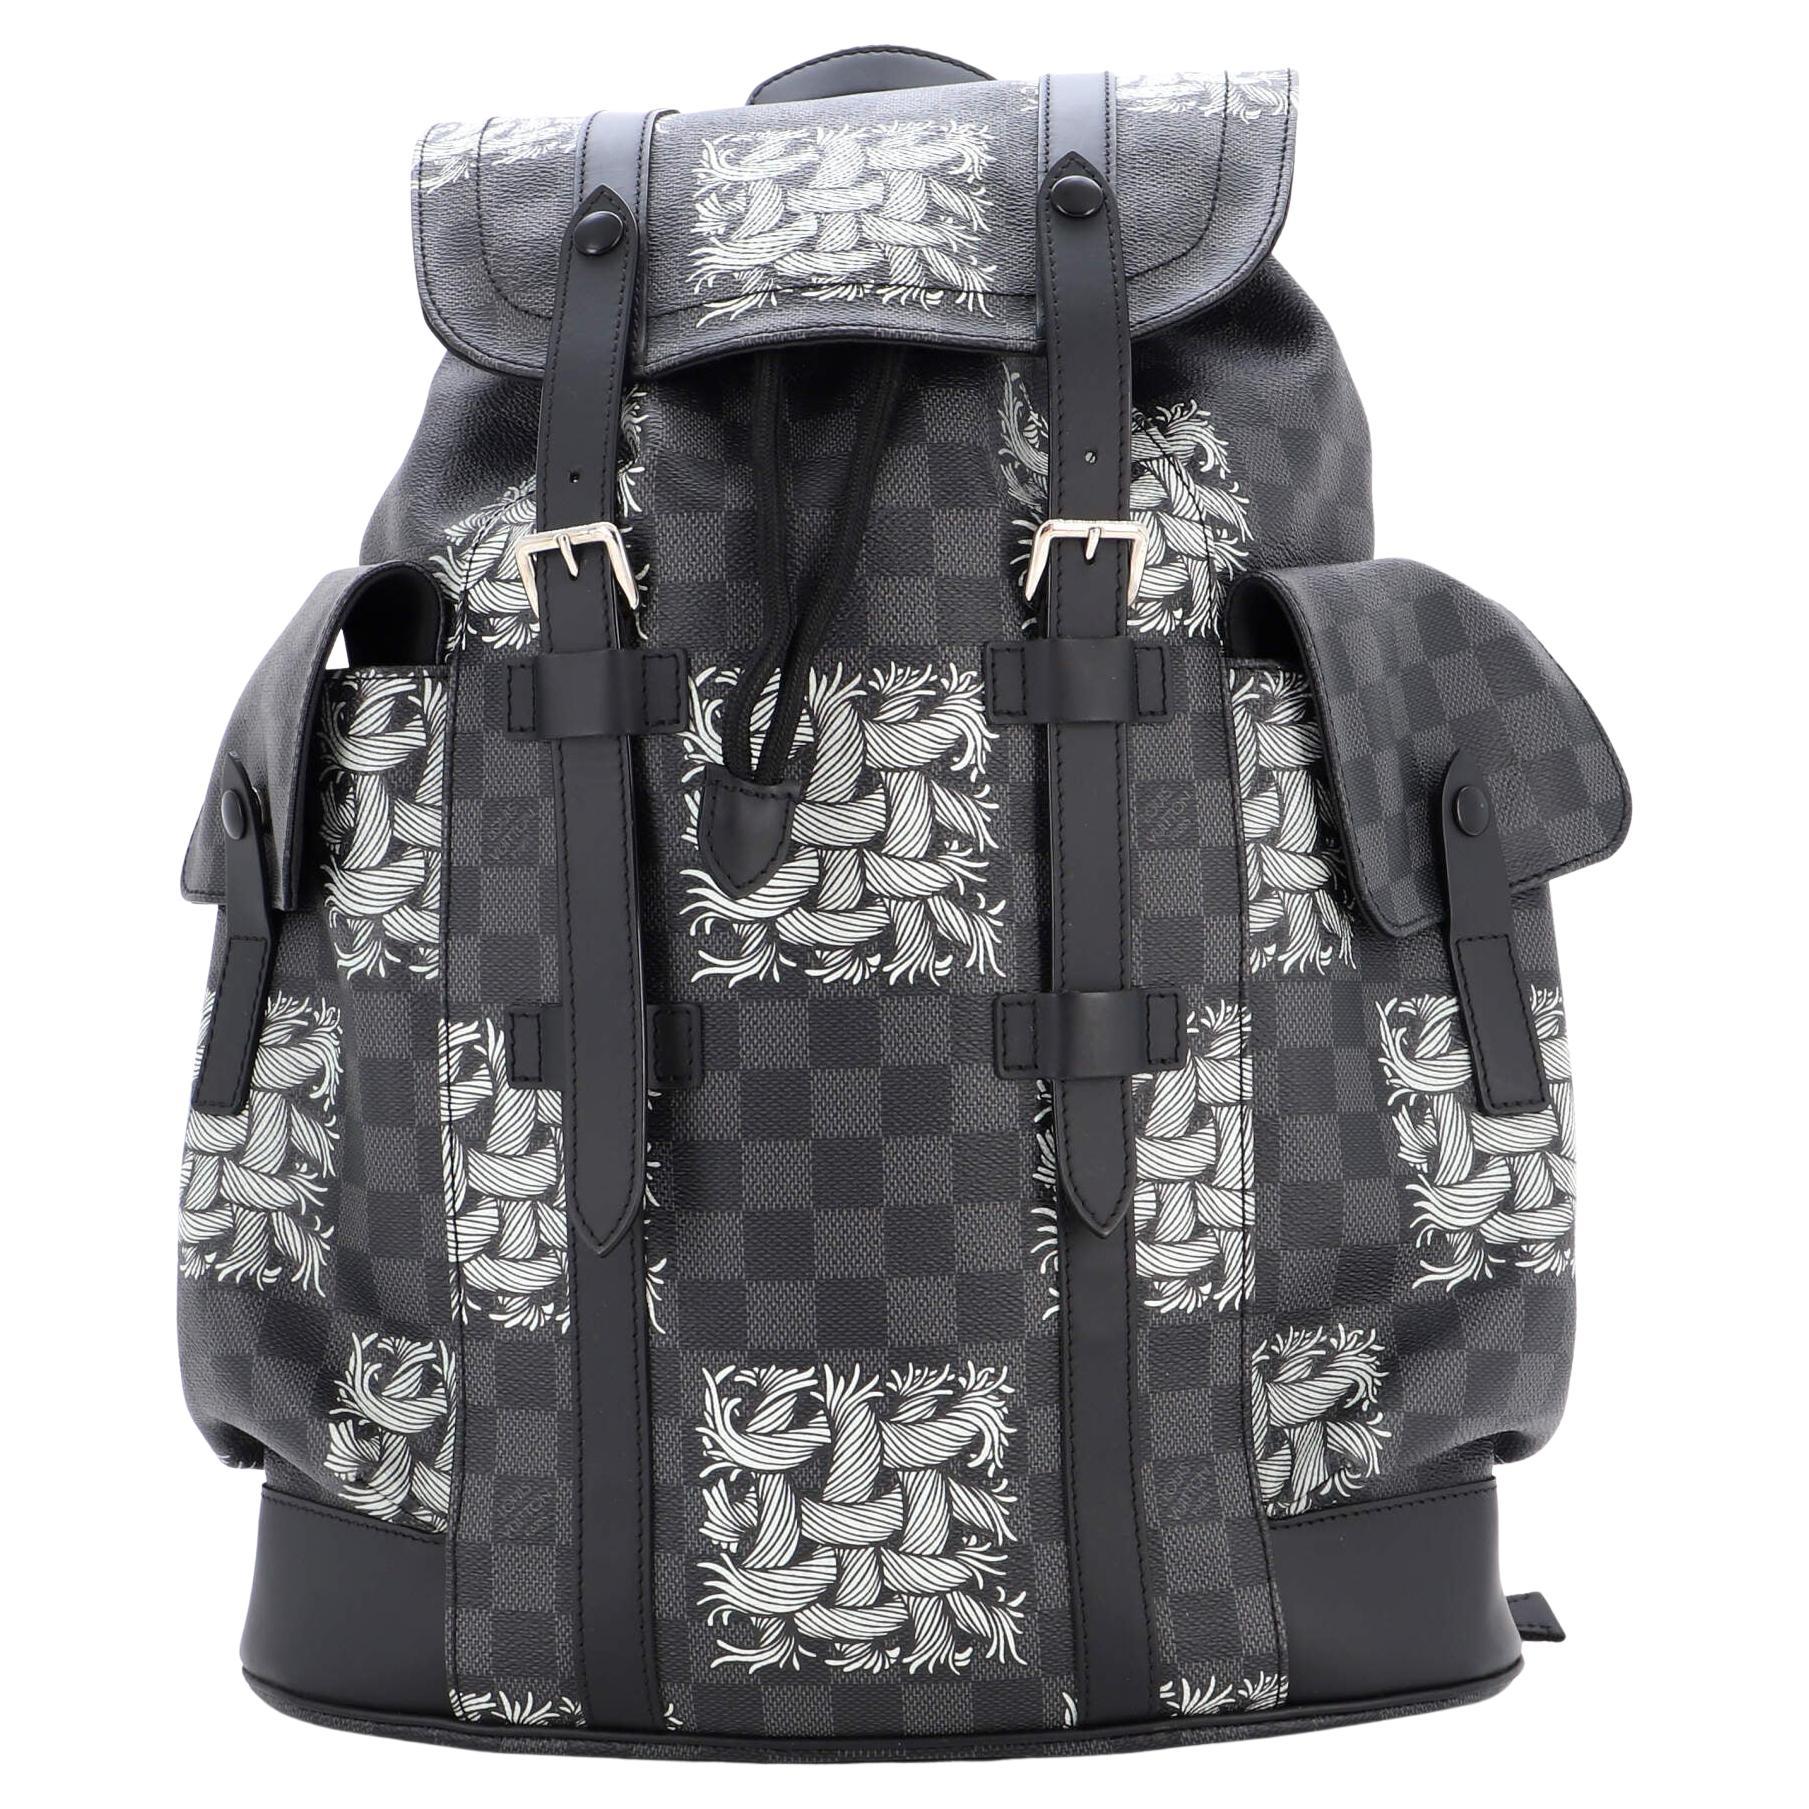 Louis Vuitton Christopher Backpack Limited Edition Nemeth Damier